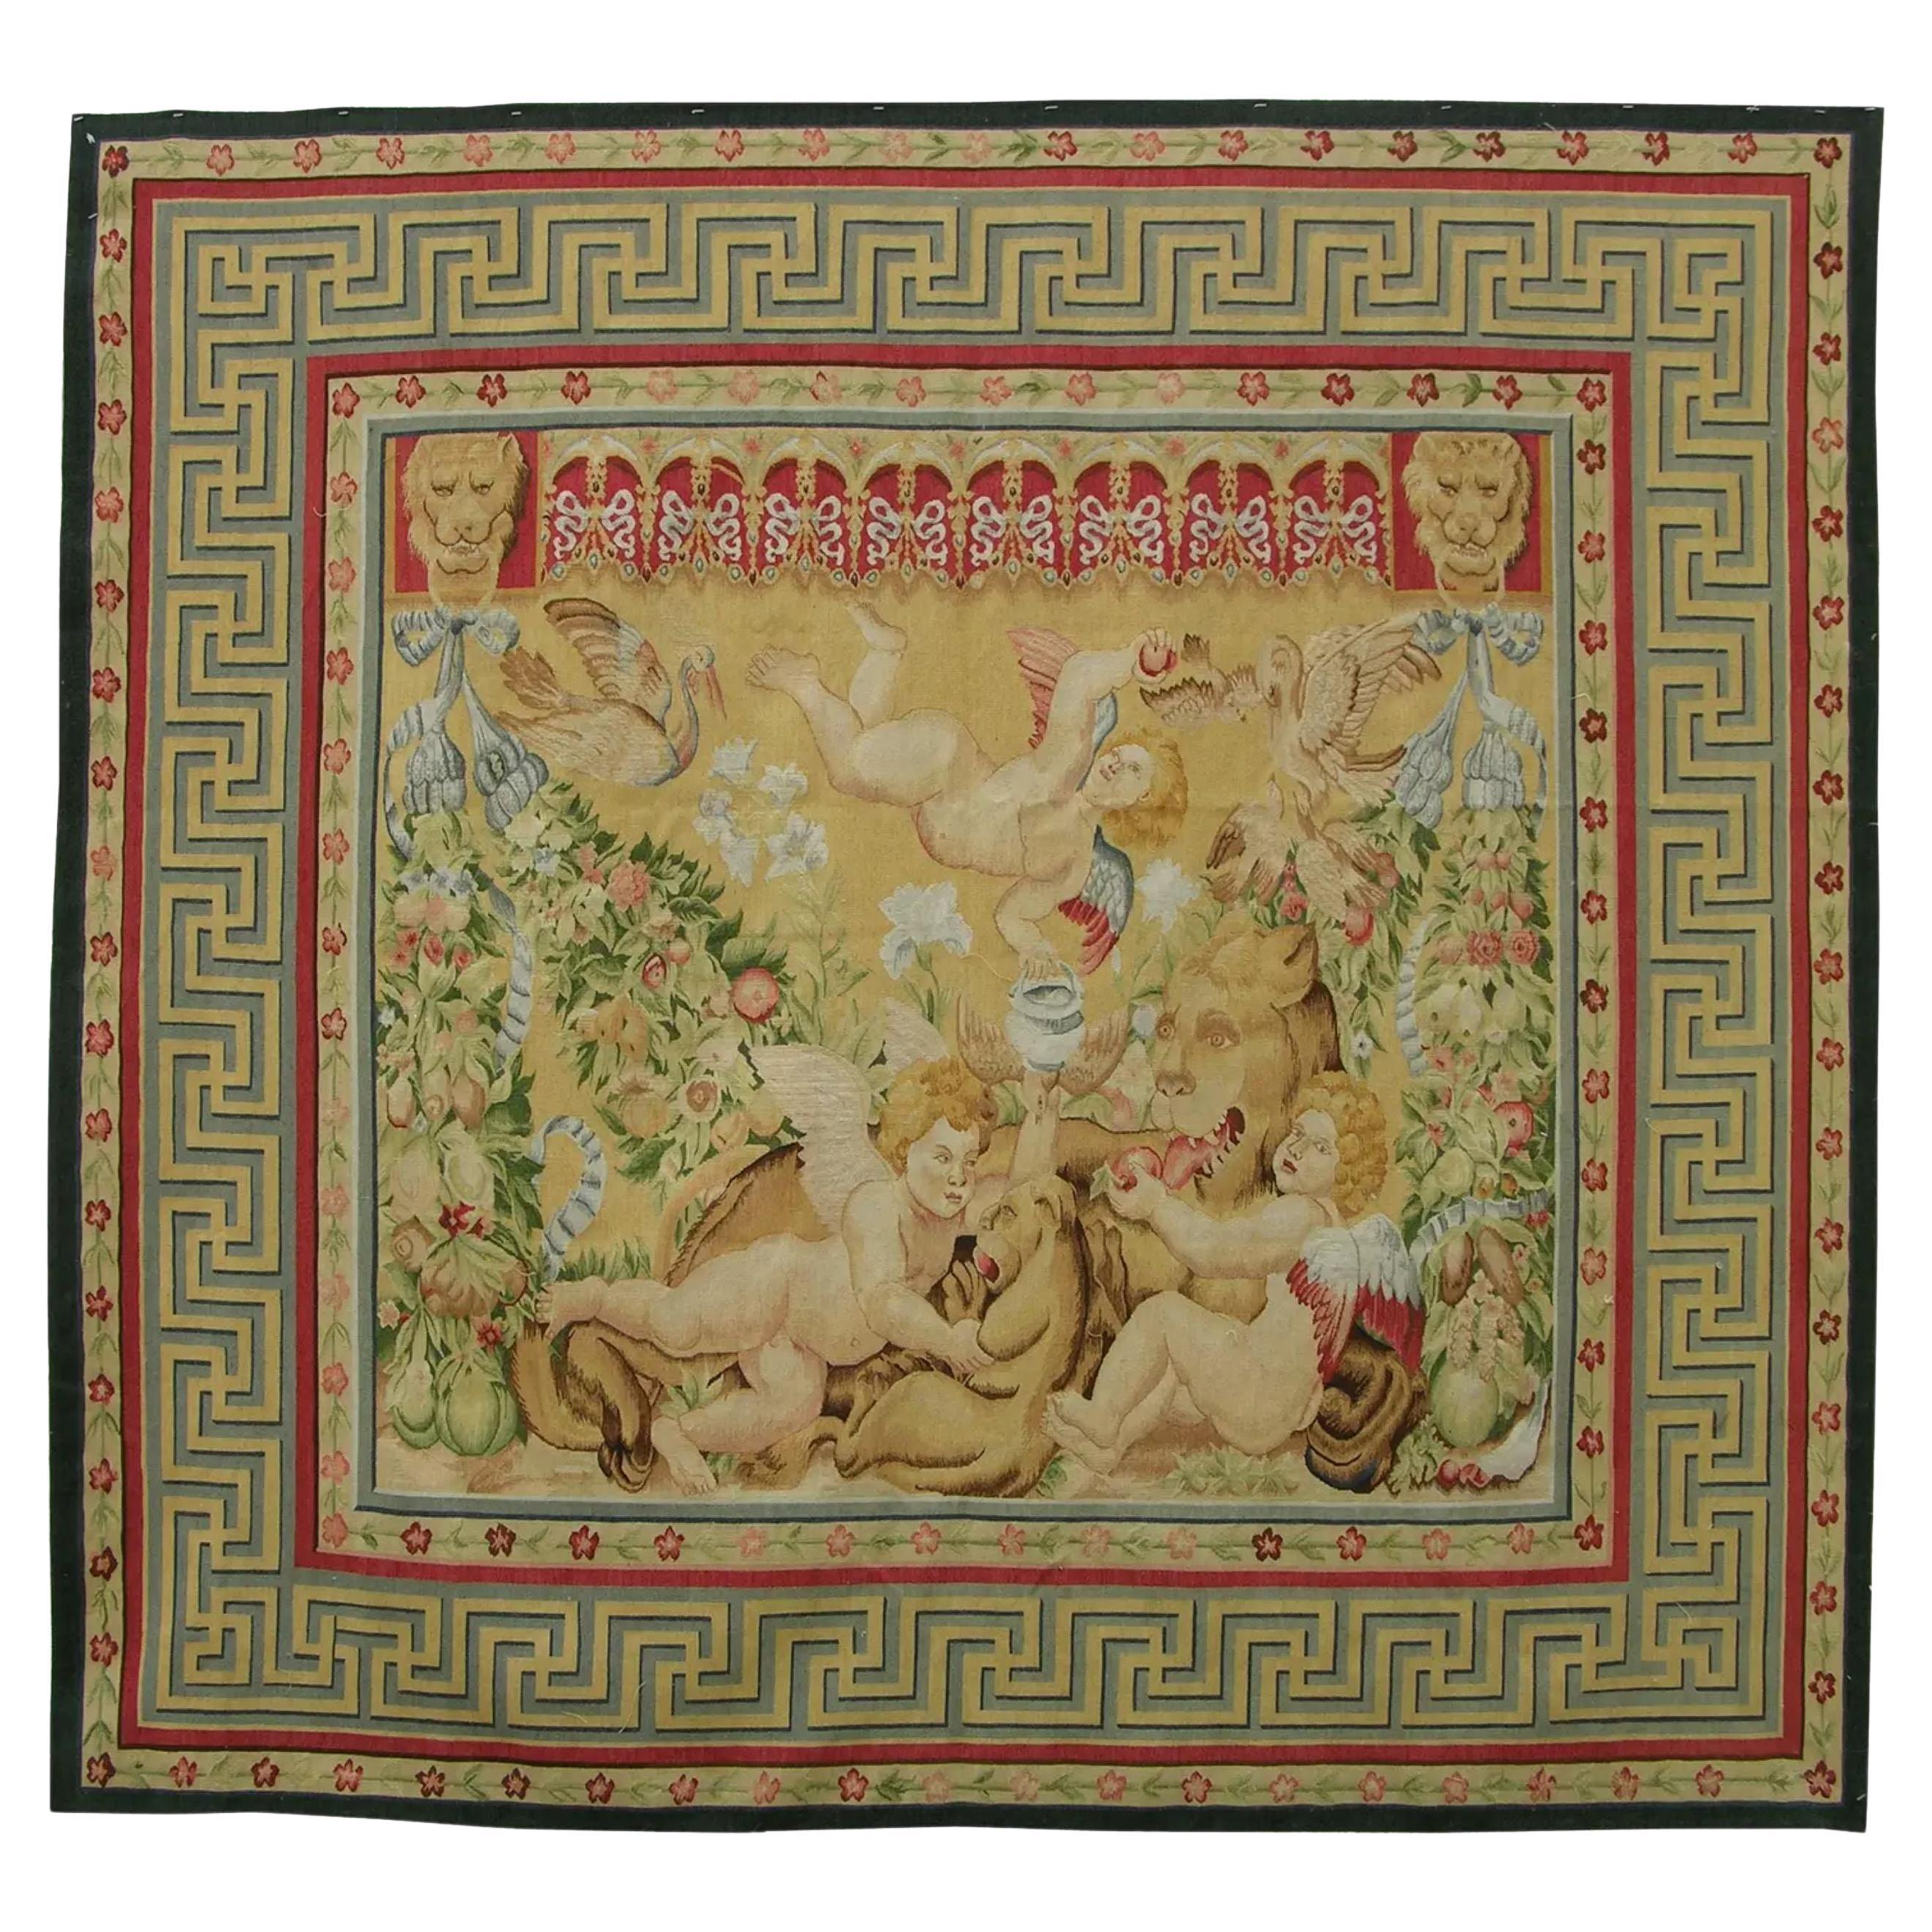 Vintage Tapestry Depicting Angels